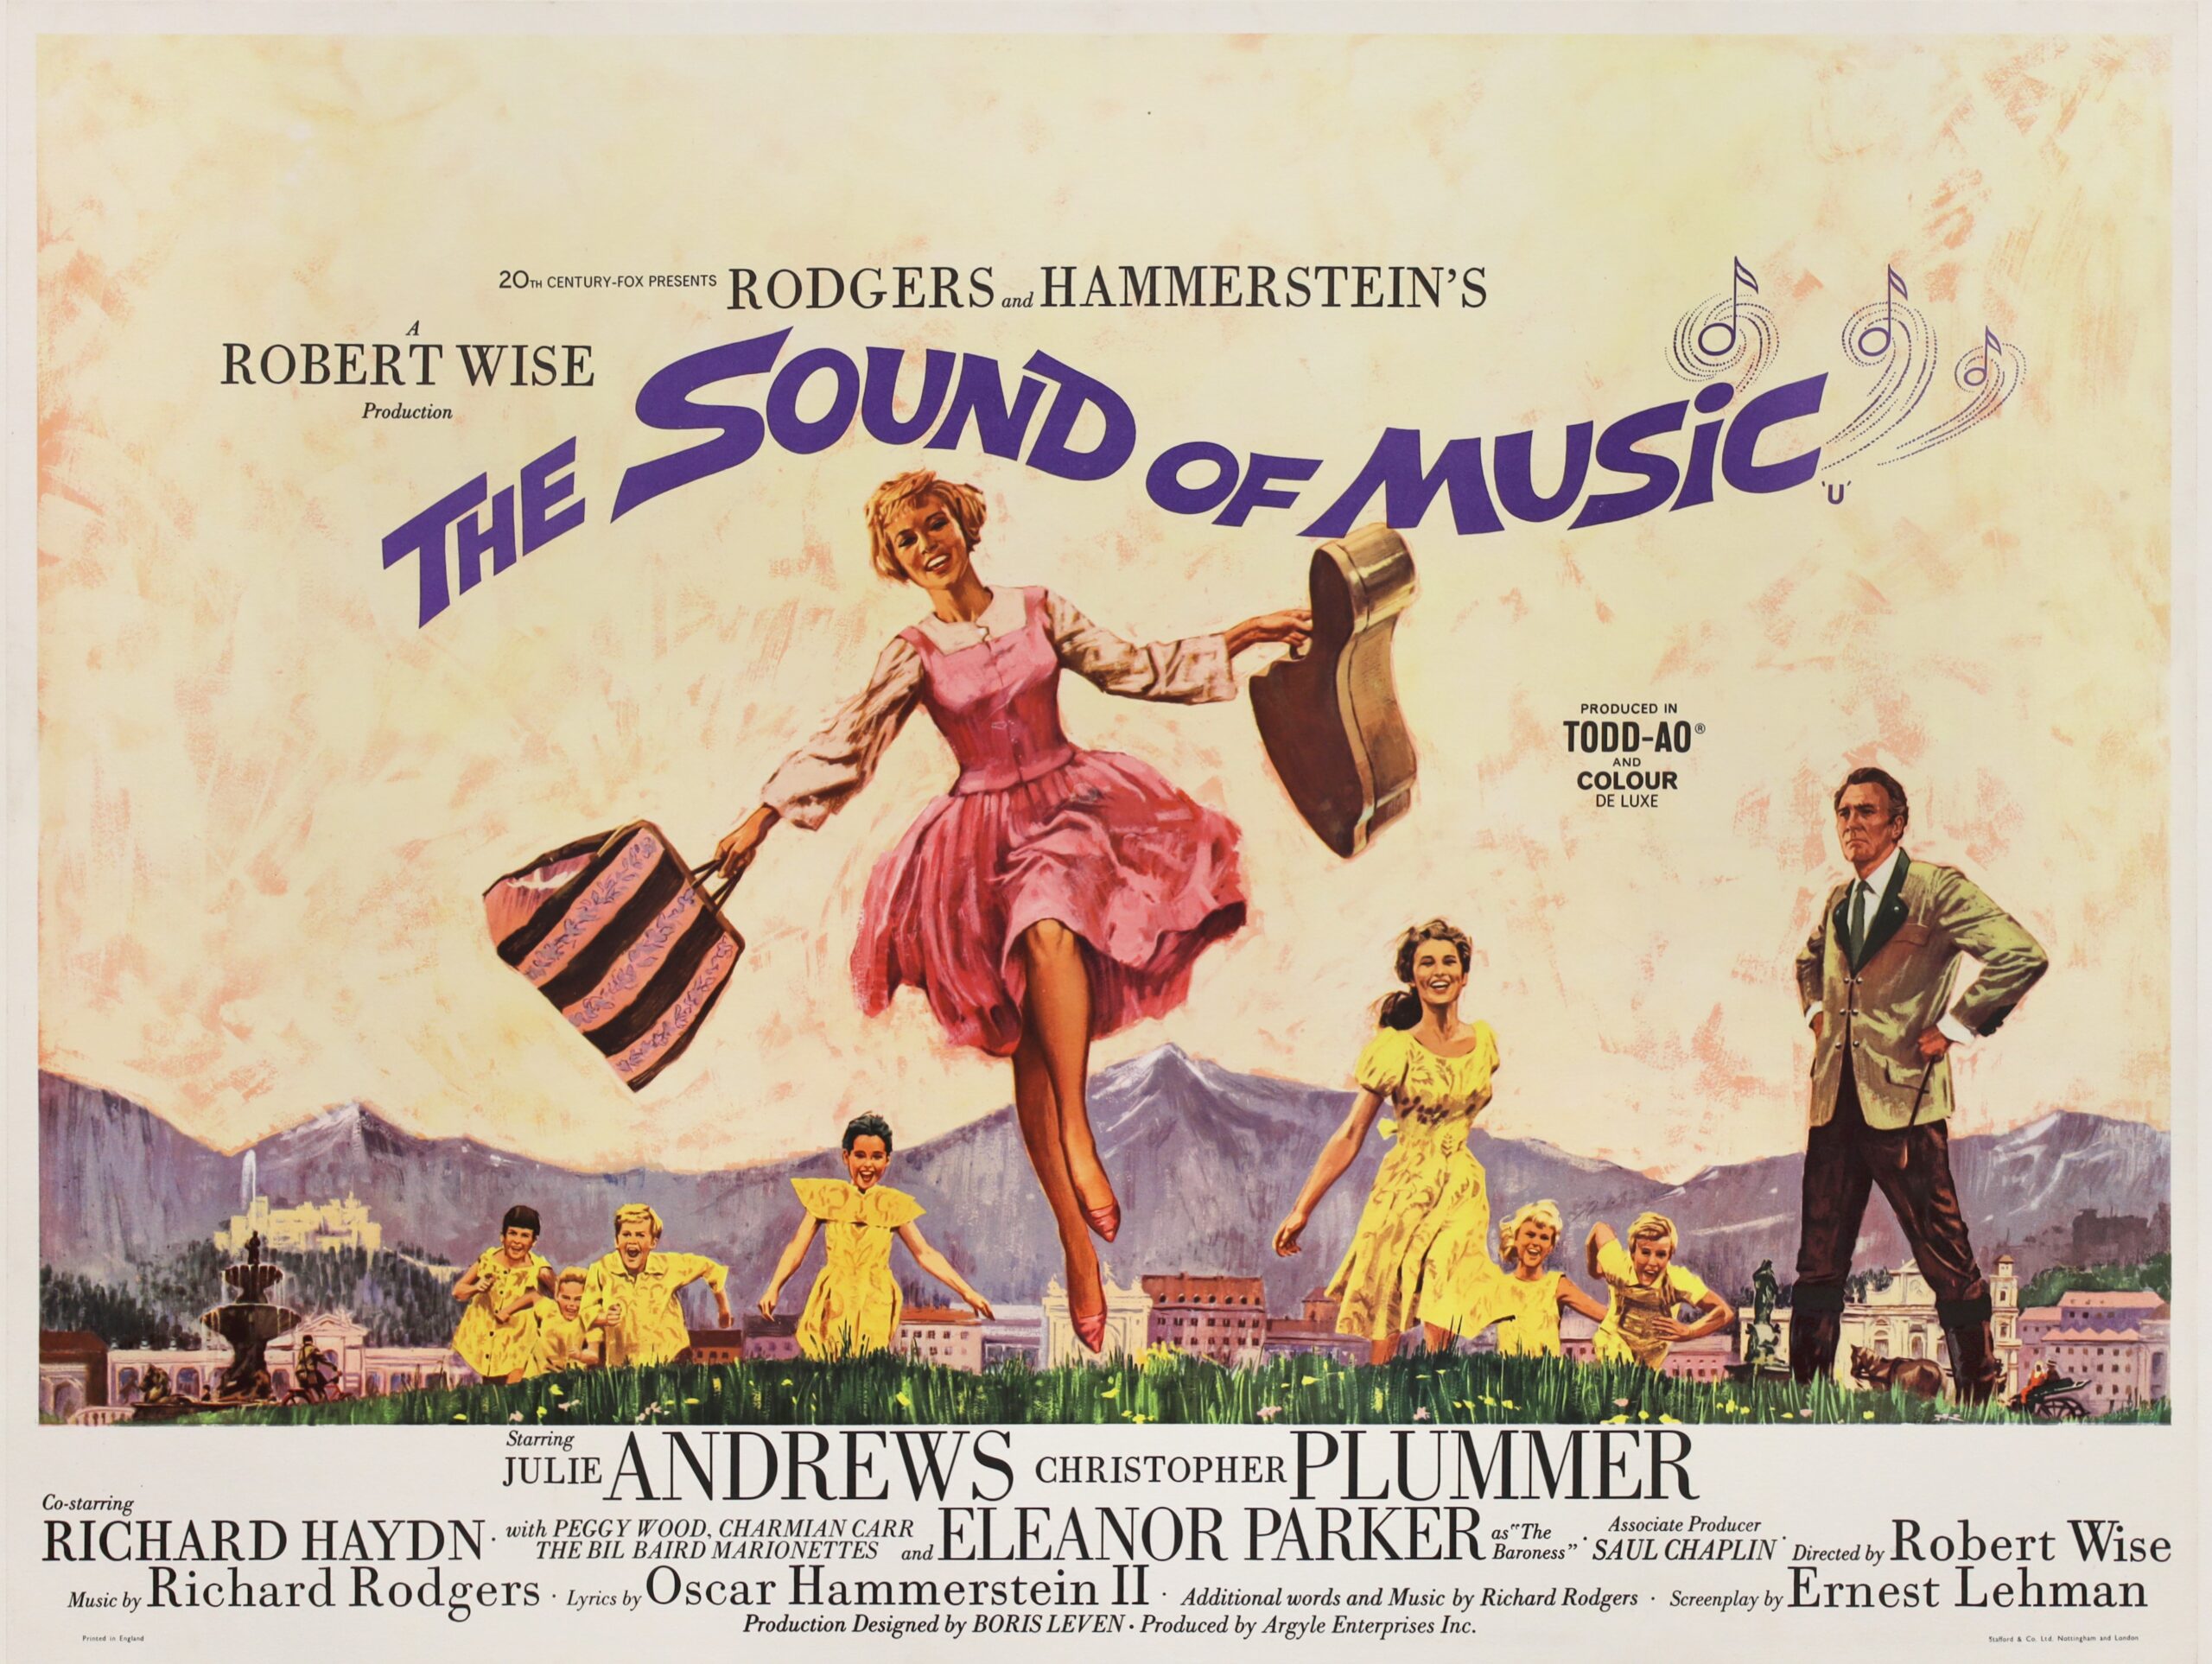 Original vintage UK Quad cinema poster for 1965 film, The Sound of Music.